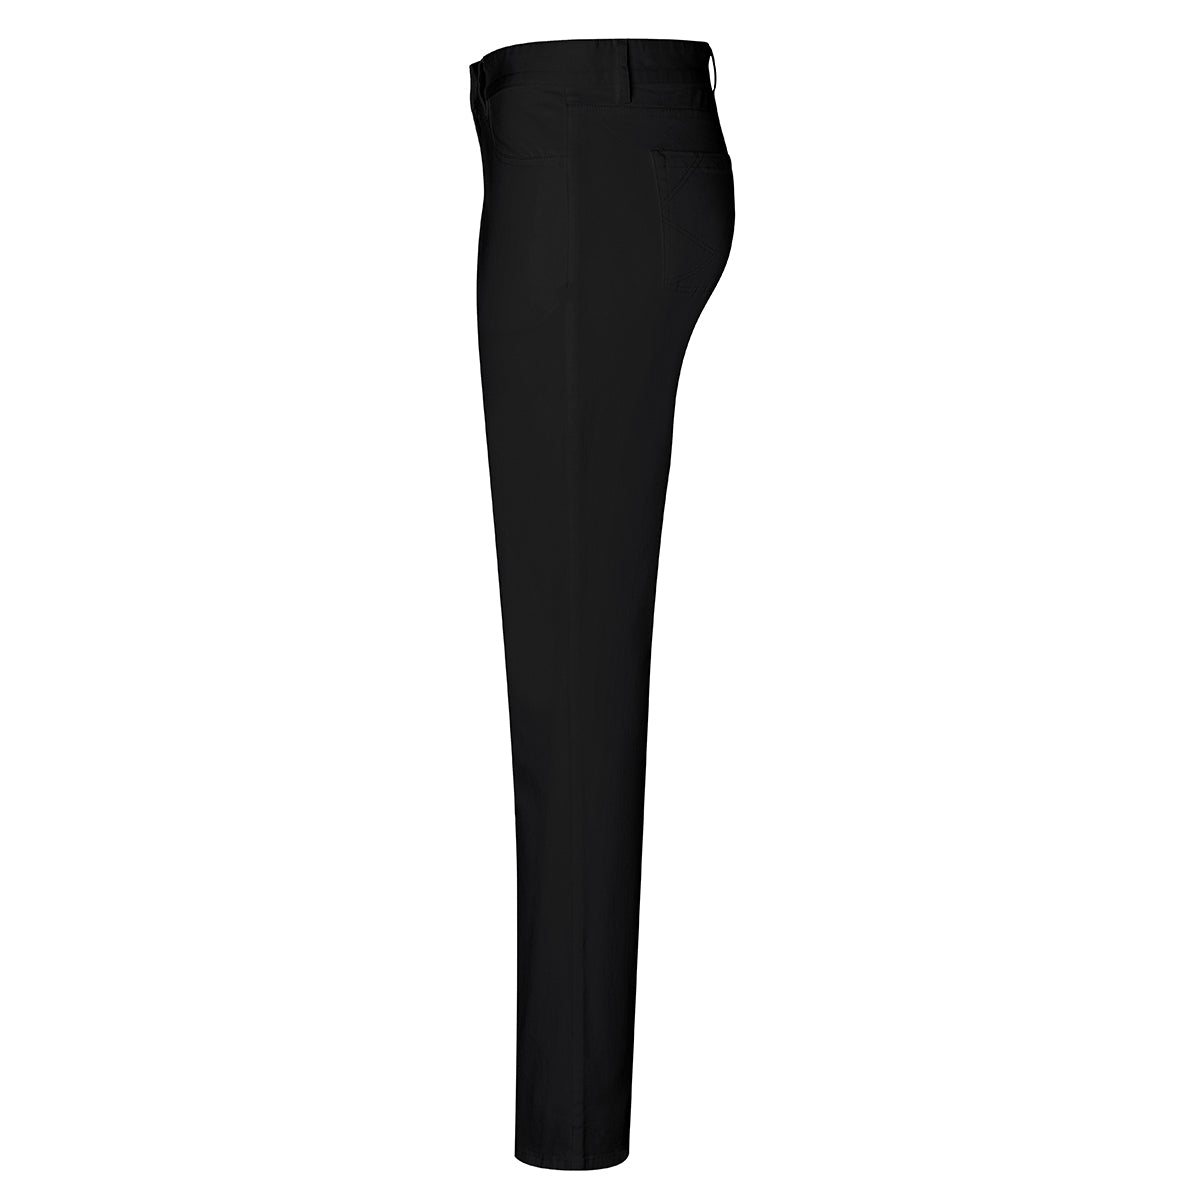 Karlowsky - 5-lomme bukser til damer - Sort - Størrelse: 54